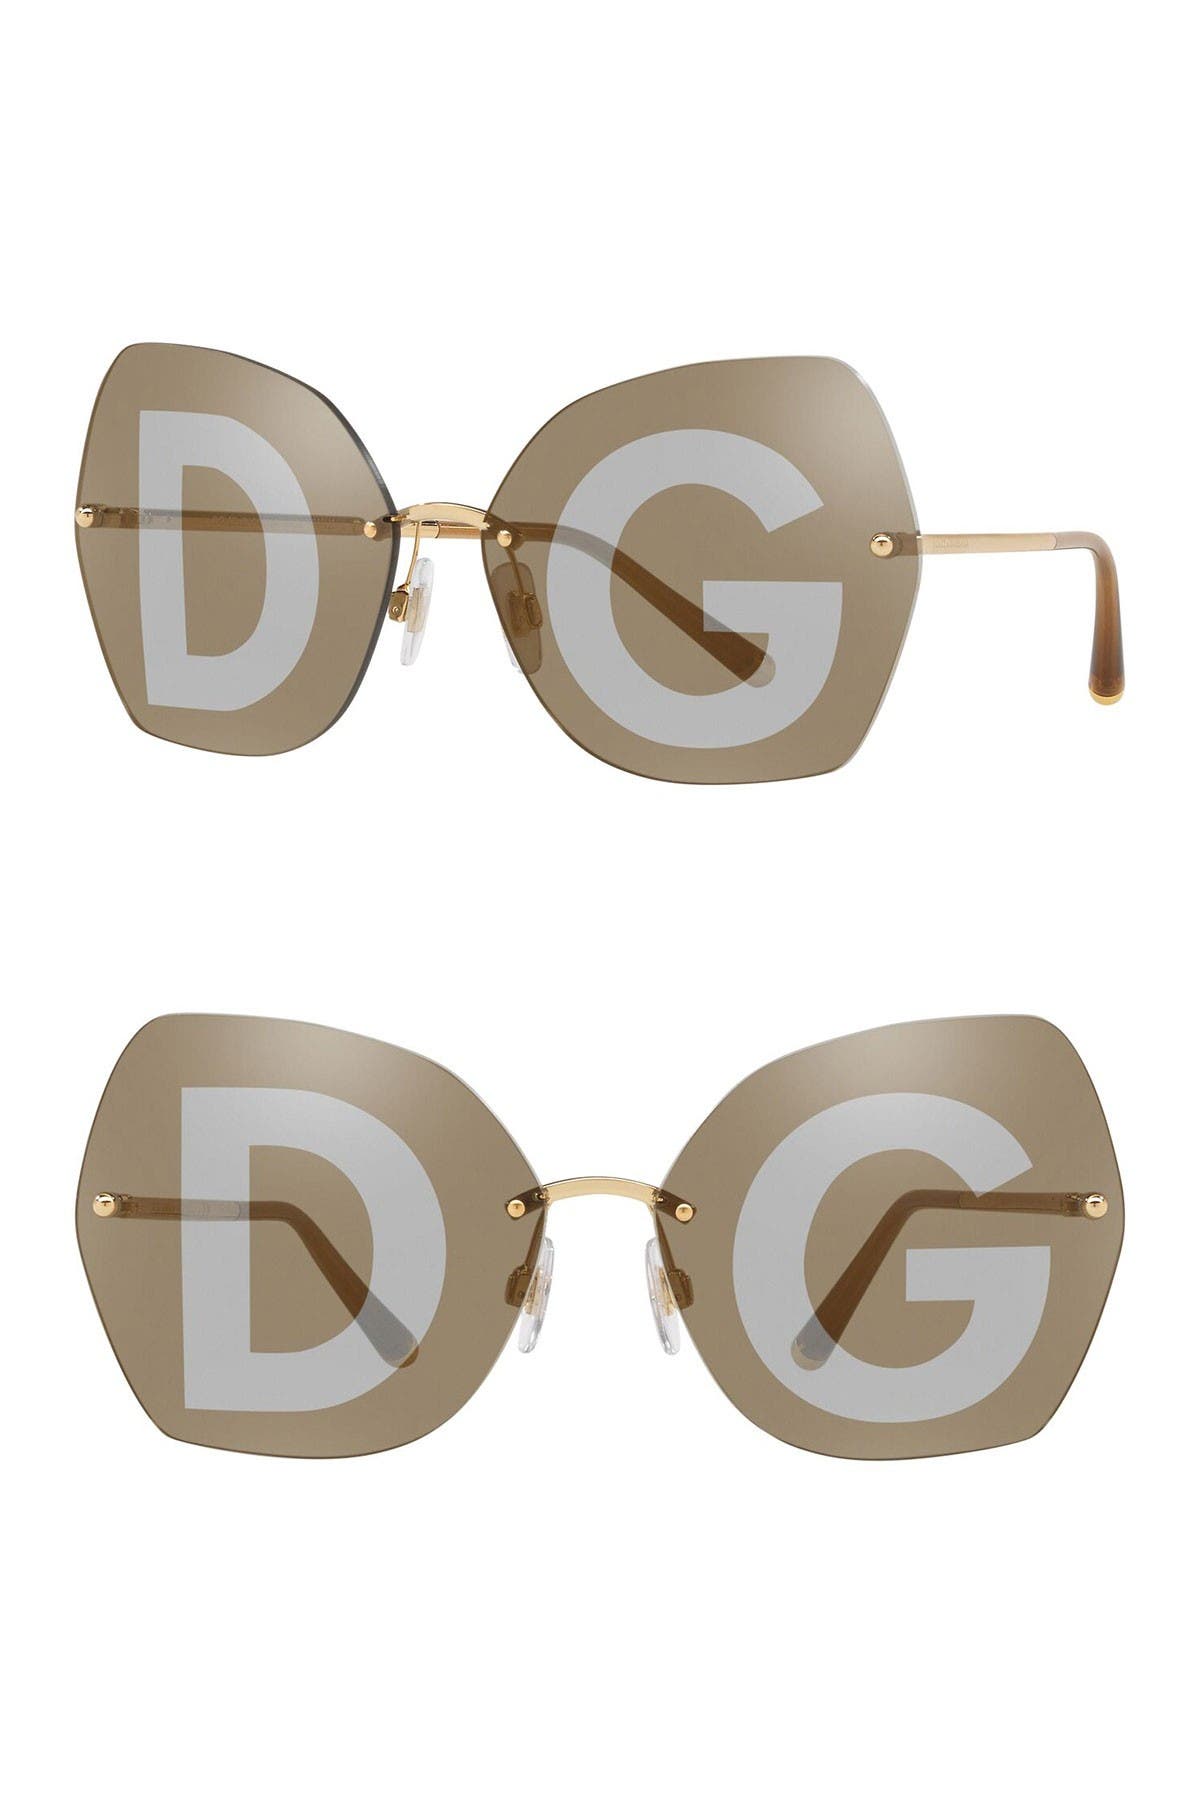 d&g logo sunglasses